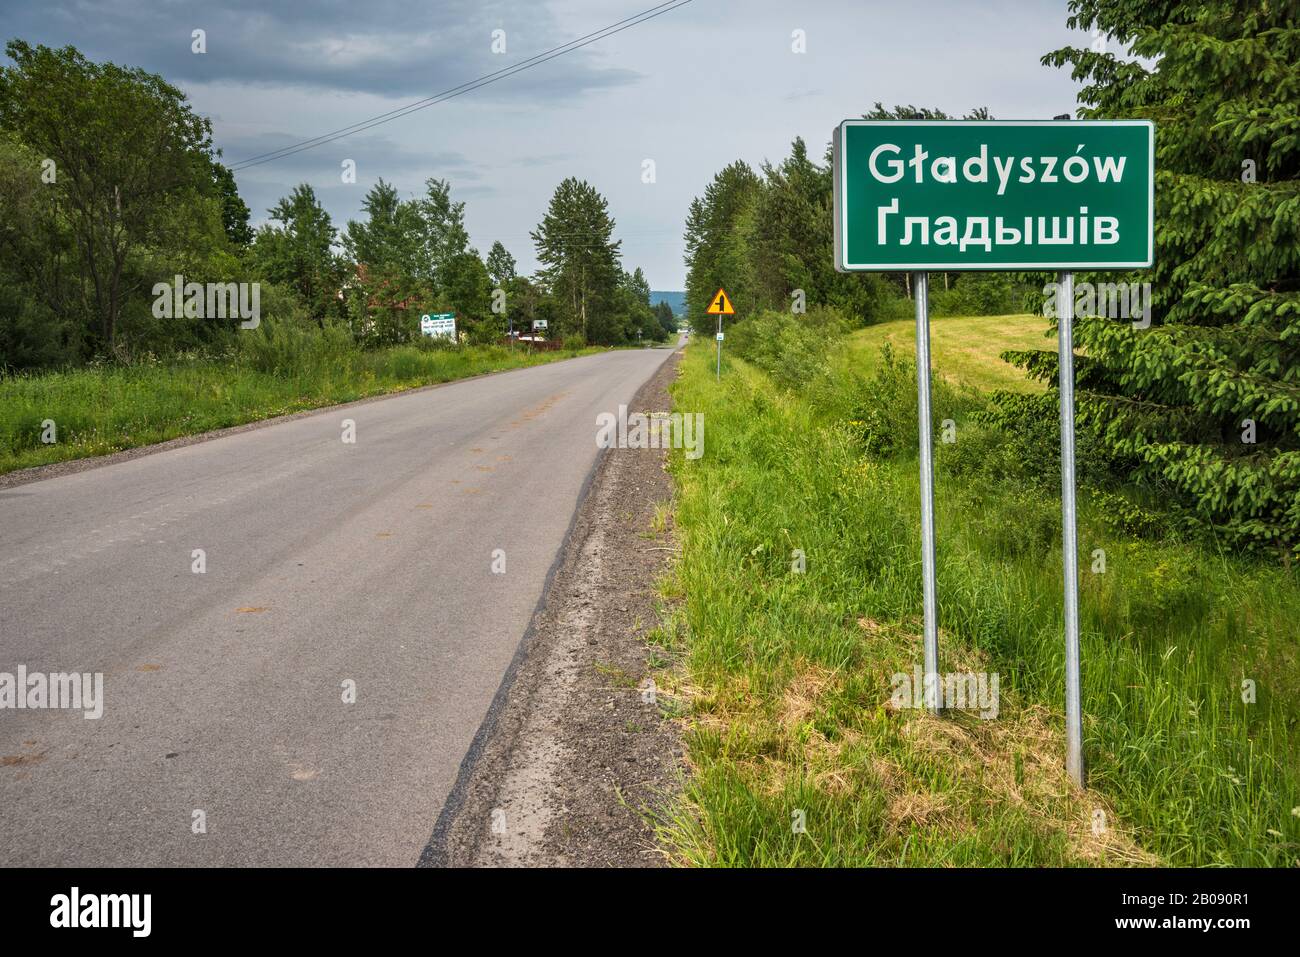 Bilingual, Polish and Ukrainian, road sign in village of Gladyszow, Lower Beskids mountain range, Western Carpathians, Malopolska, Poland Stock Photo